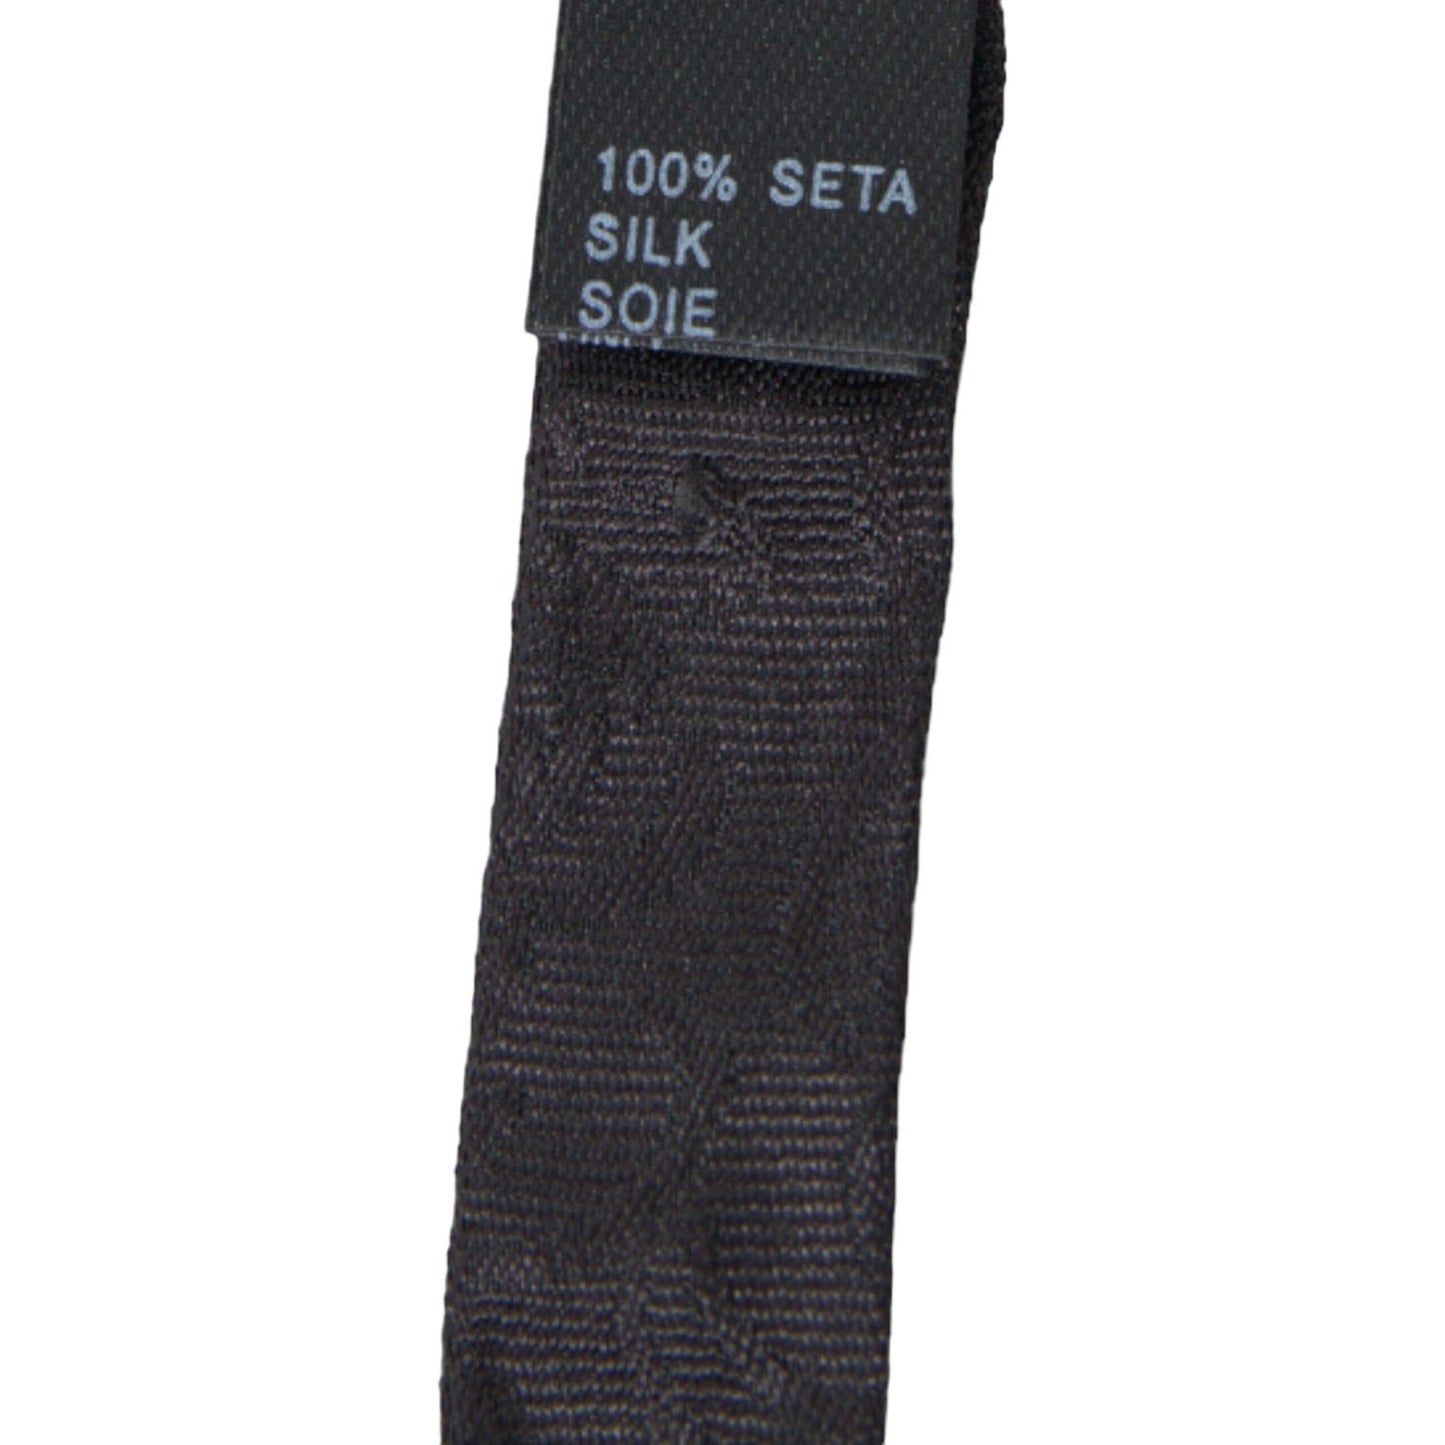 Dolce & Gabbana Elegant Black Fantasy Silk Bow Tie black-fantasy-silk-adjustable-neck-men-papillon-bow-tie